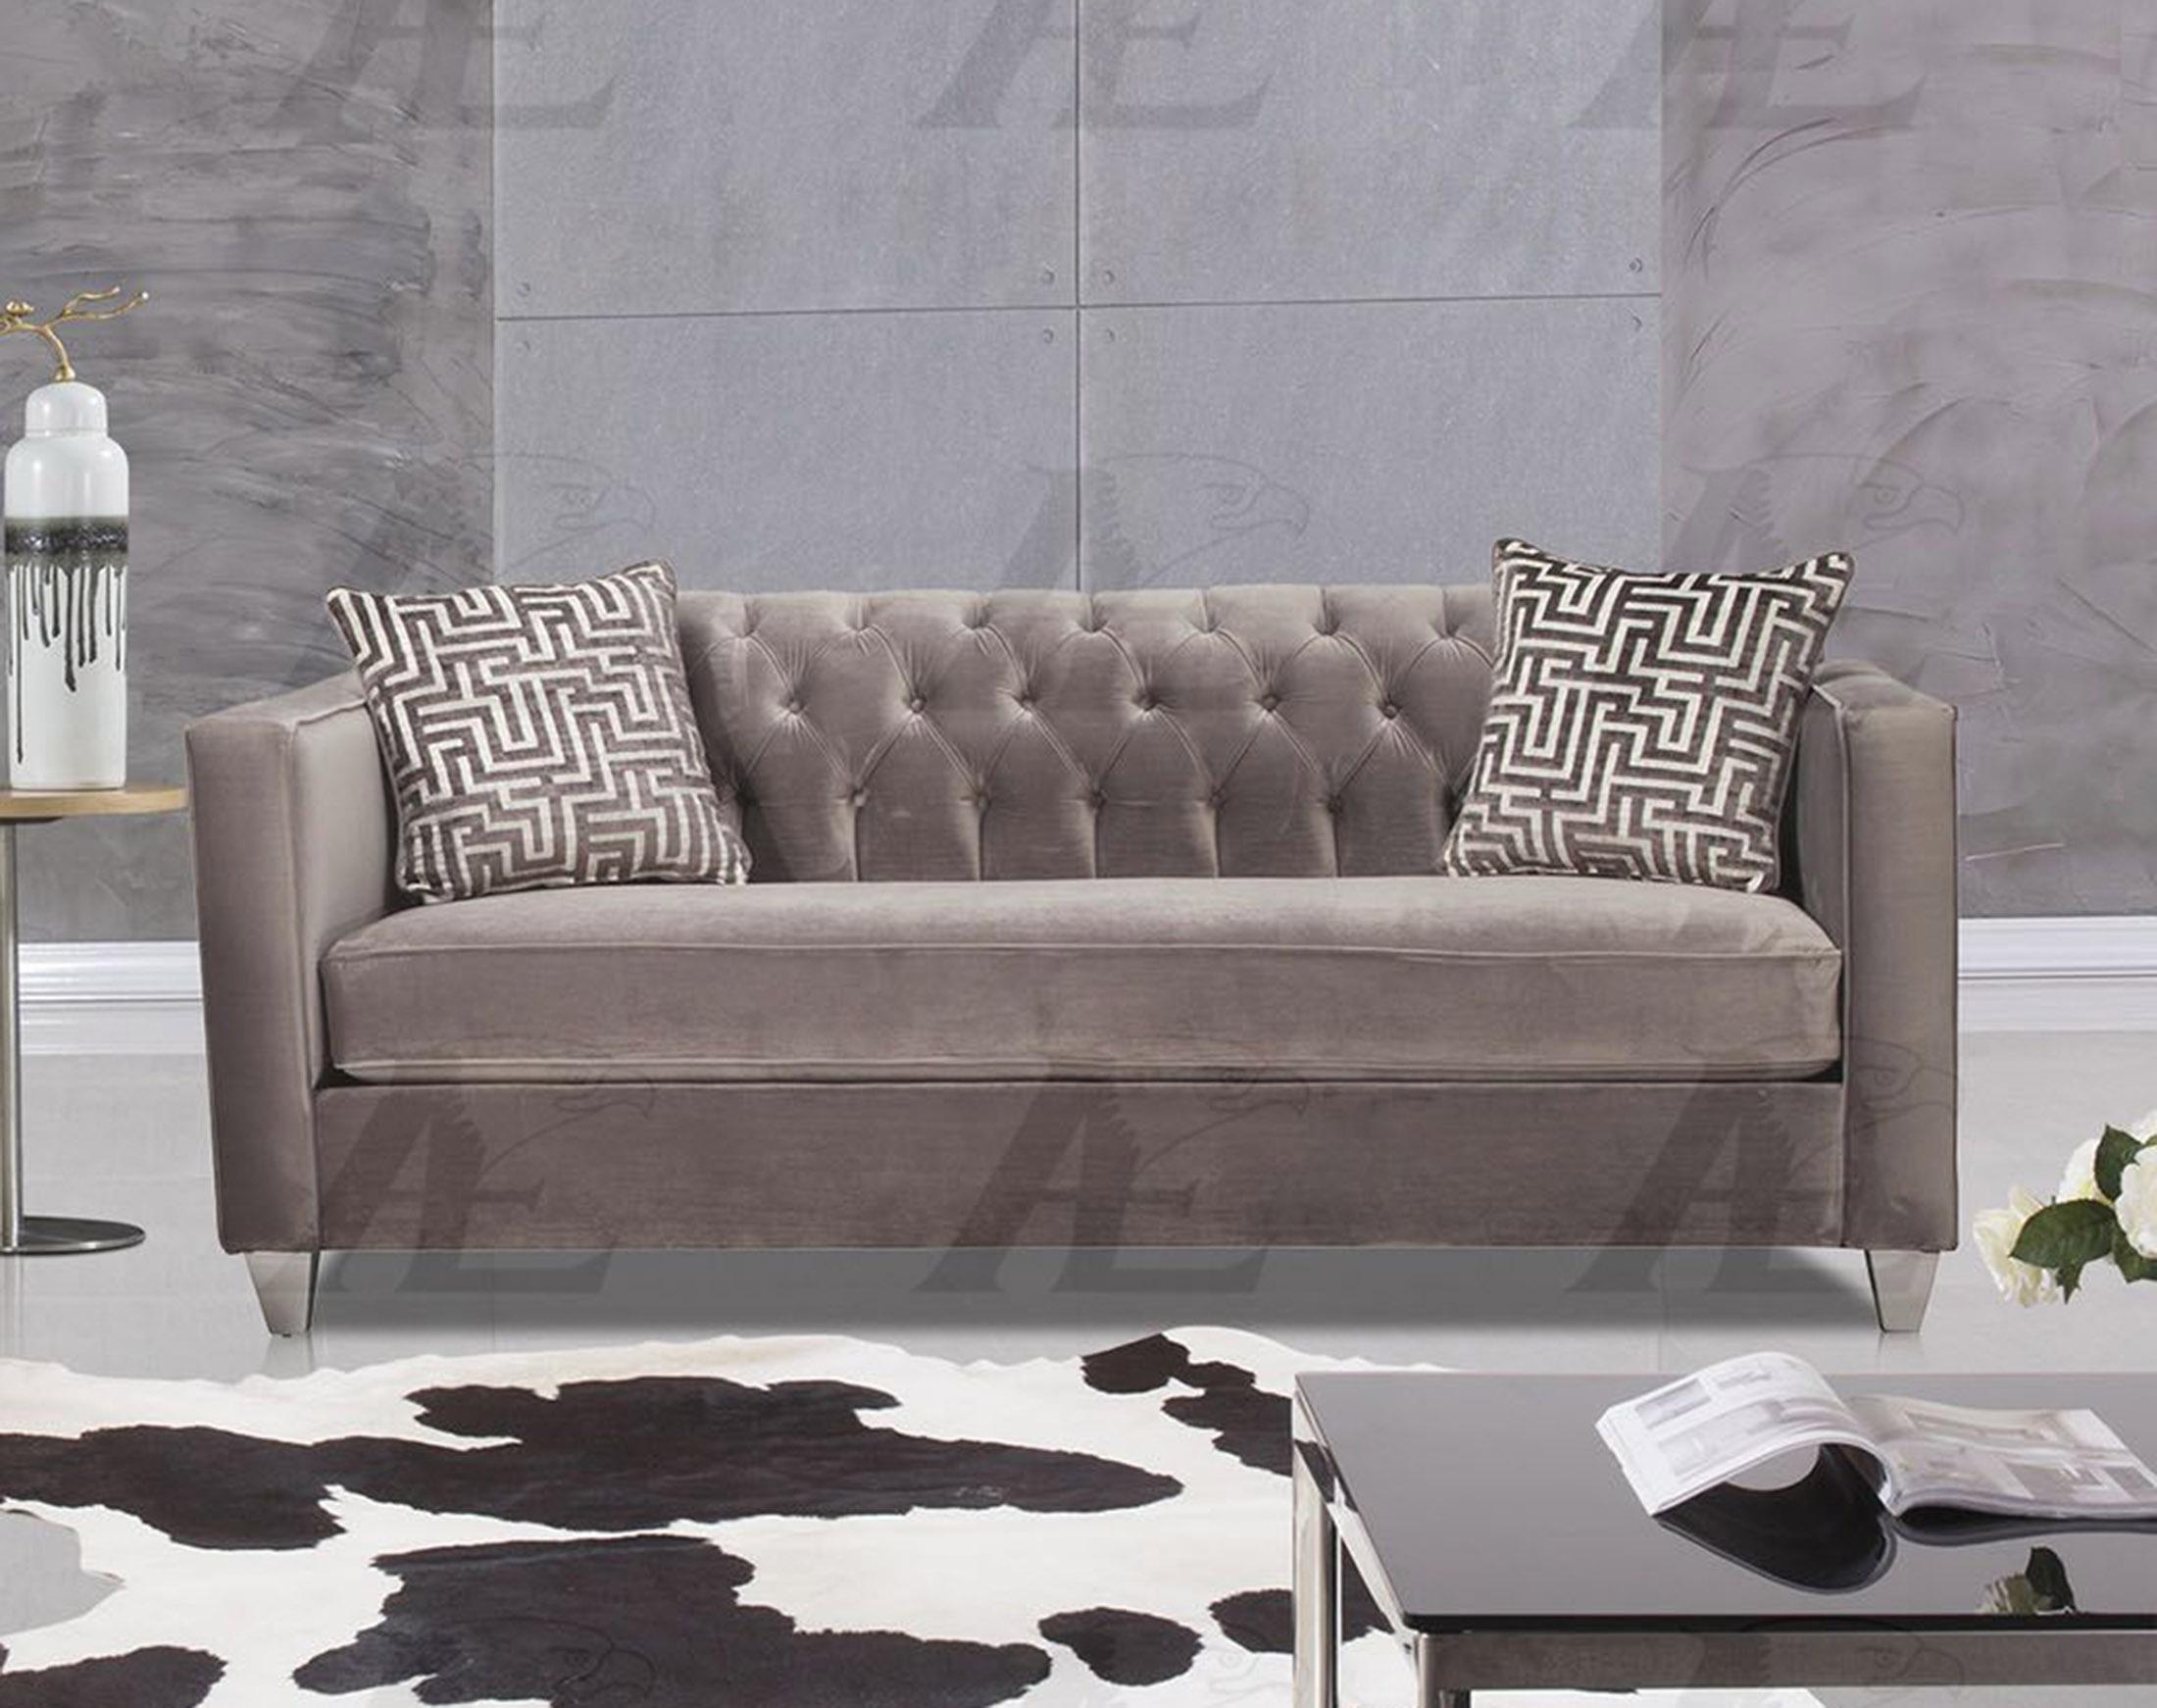 

    
American Eagle Furniture AE2602-BR Sofa and Loveseat Set Gray AE2602-GR Set-2
